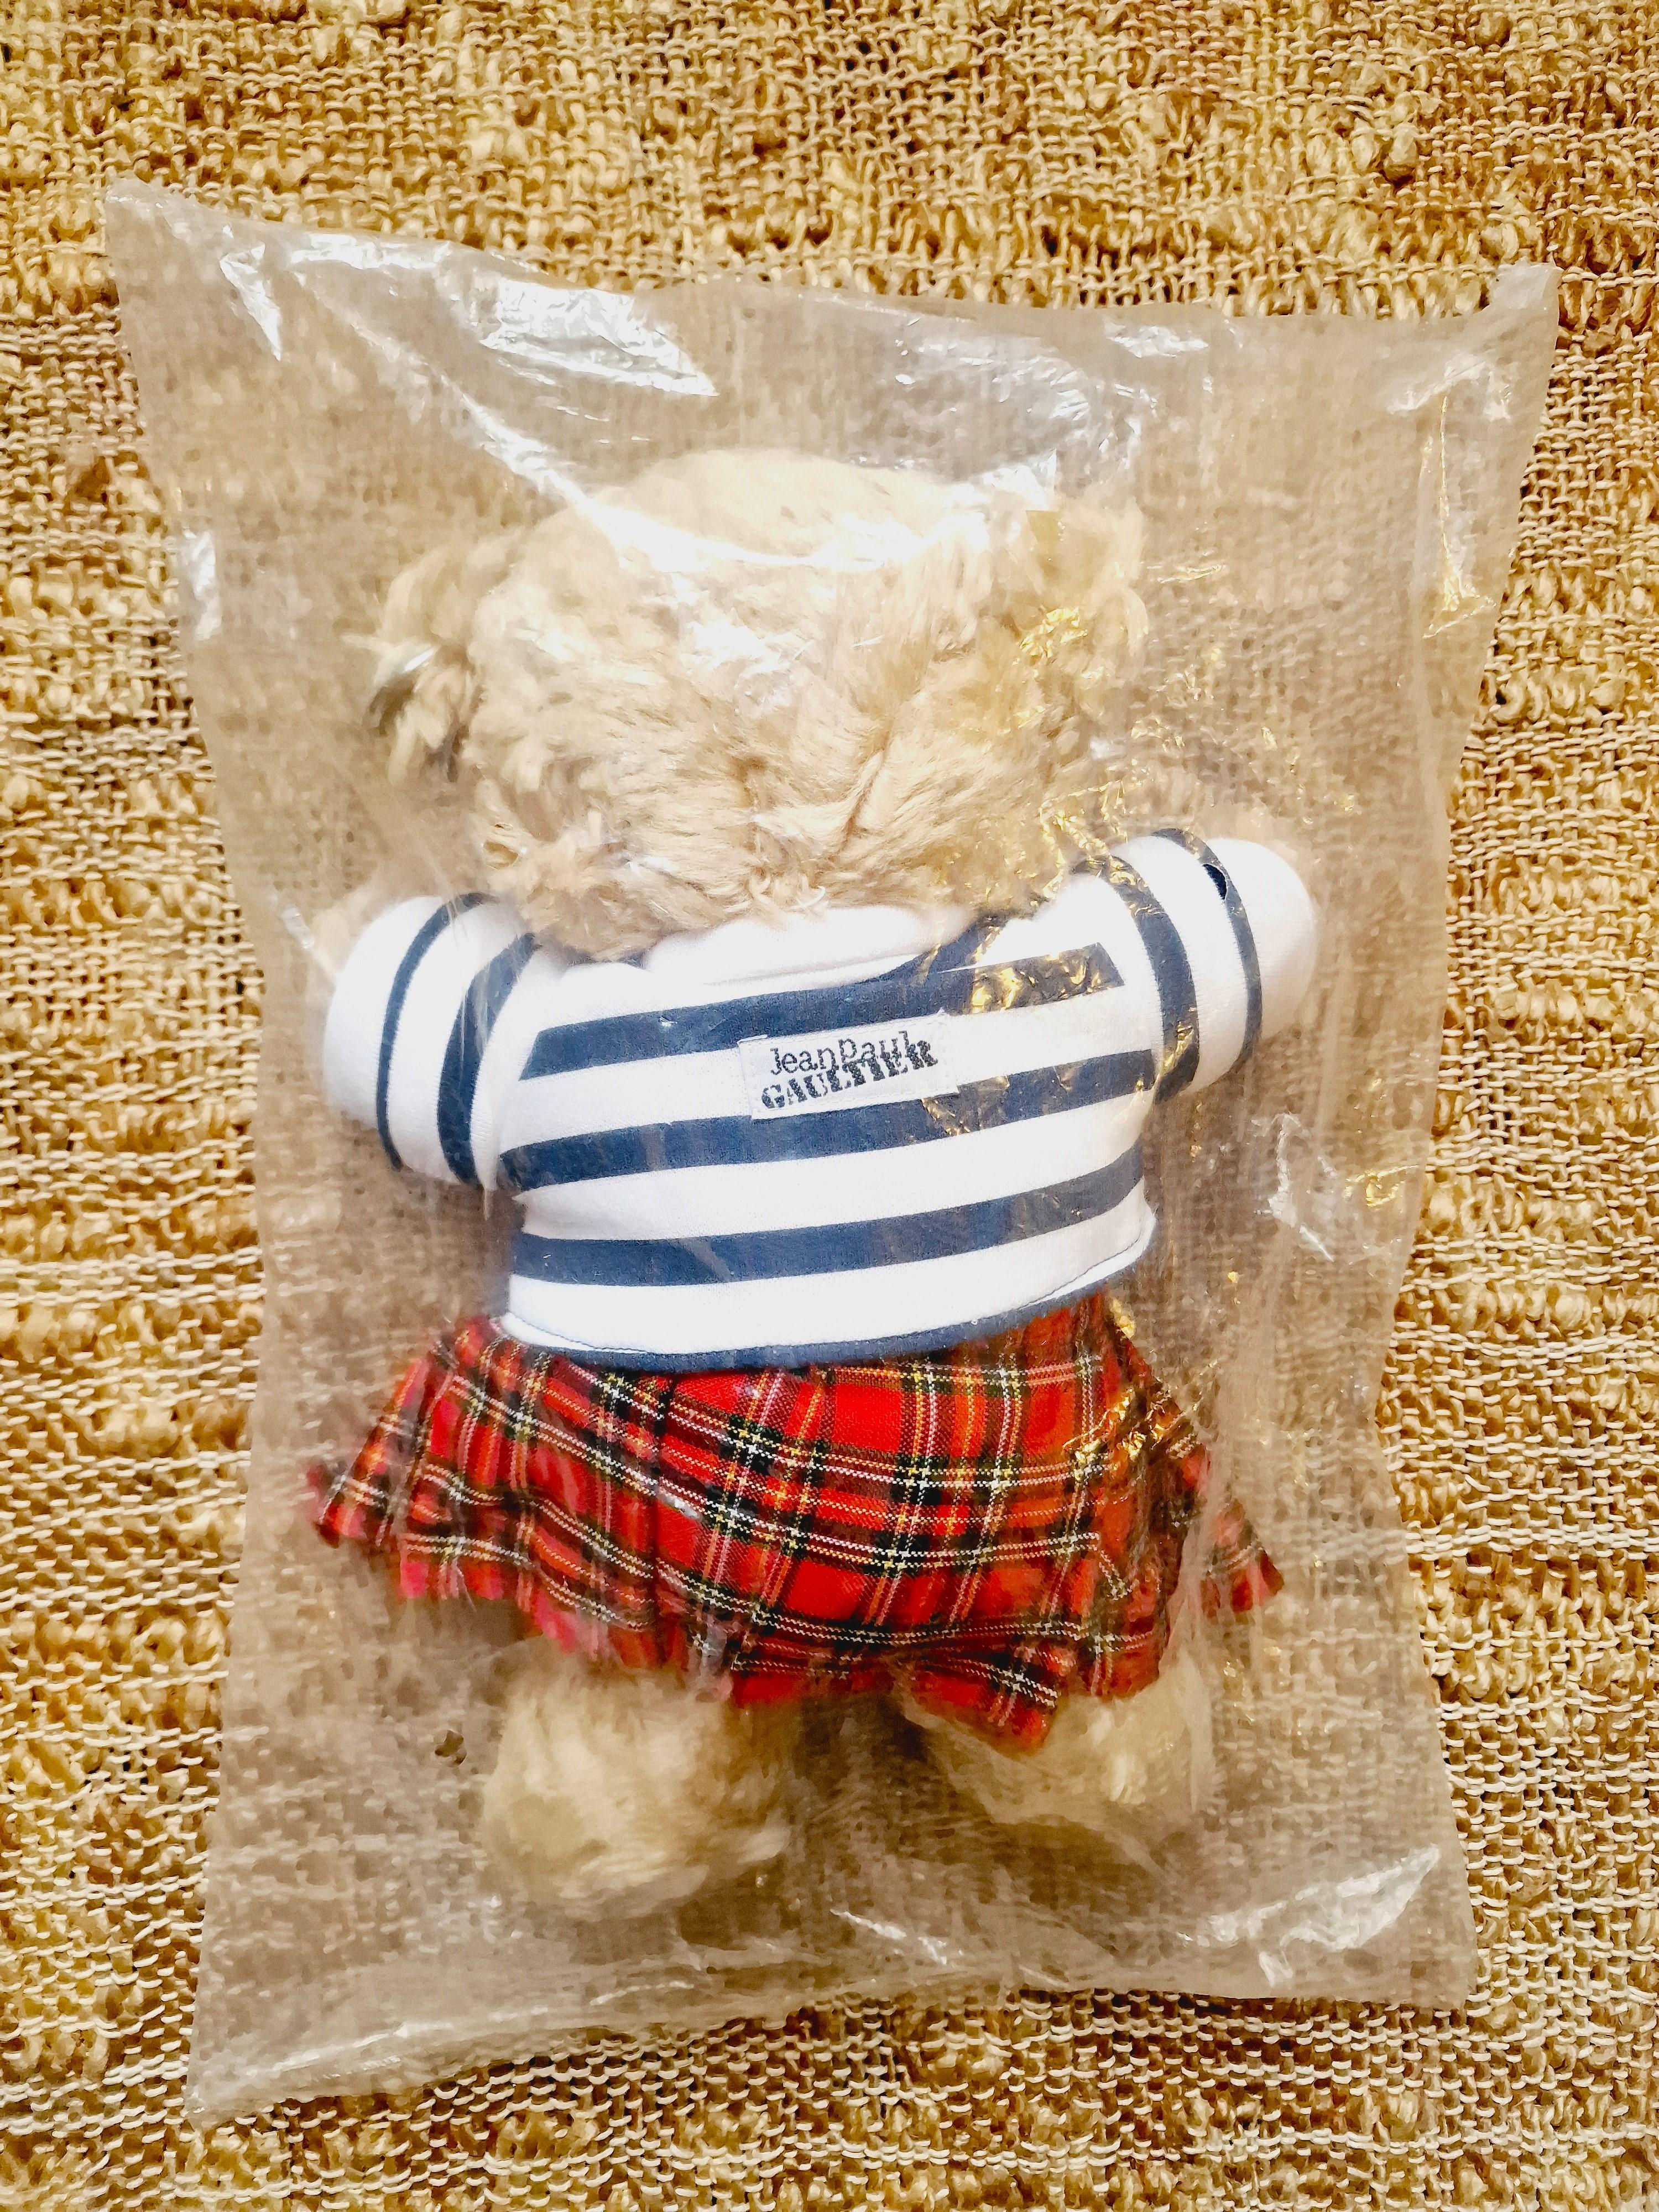 Jean Paul Gaultier Punk Rock New Soft Stuffed Toy Plush Sailor Marine Teddy Bear For Sale 1